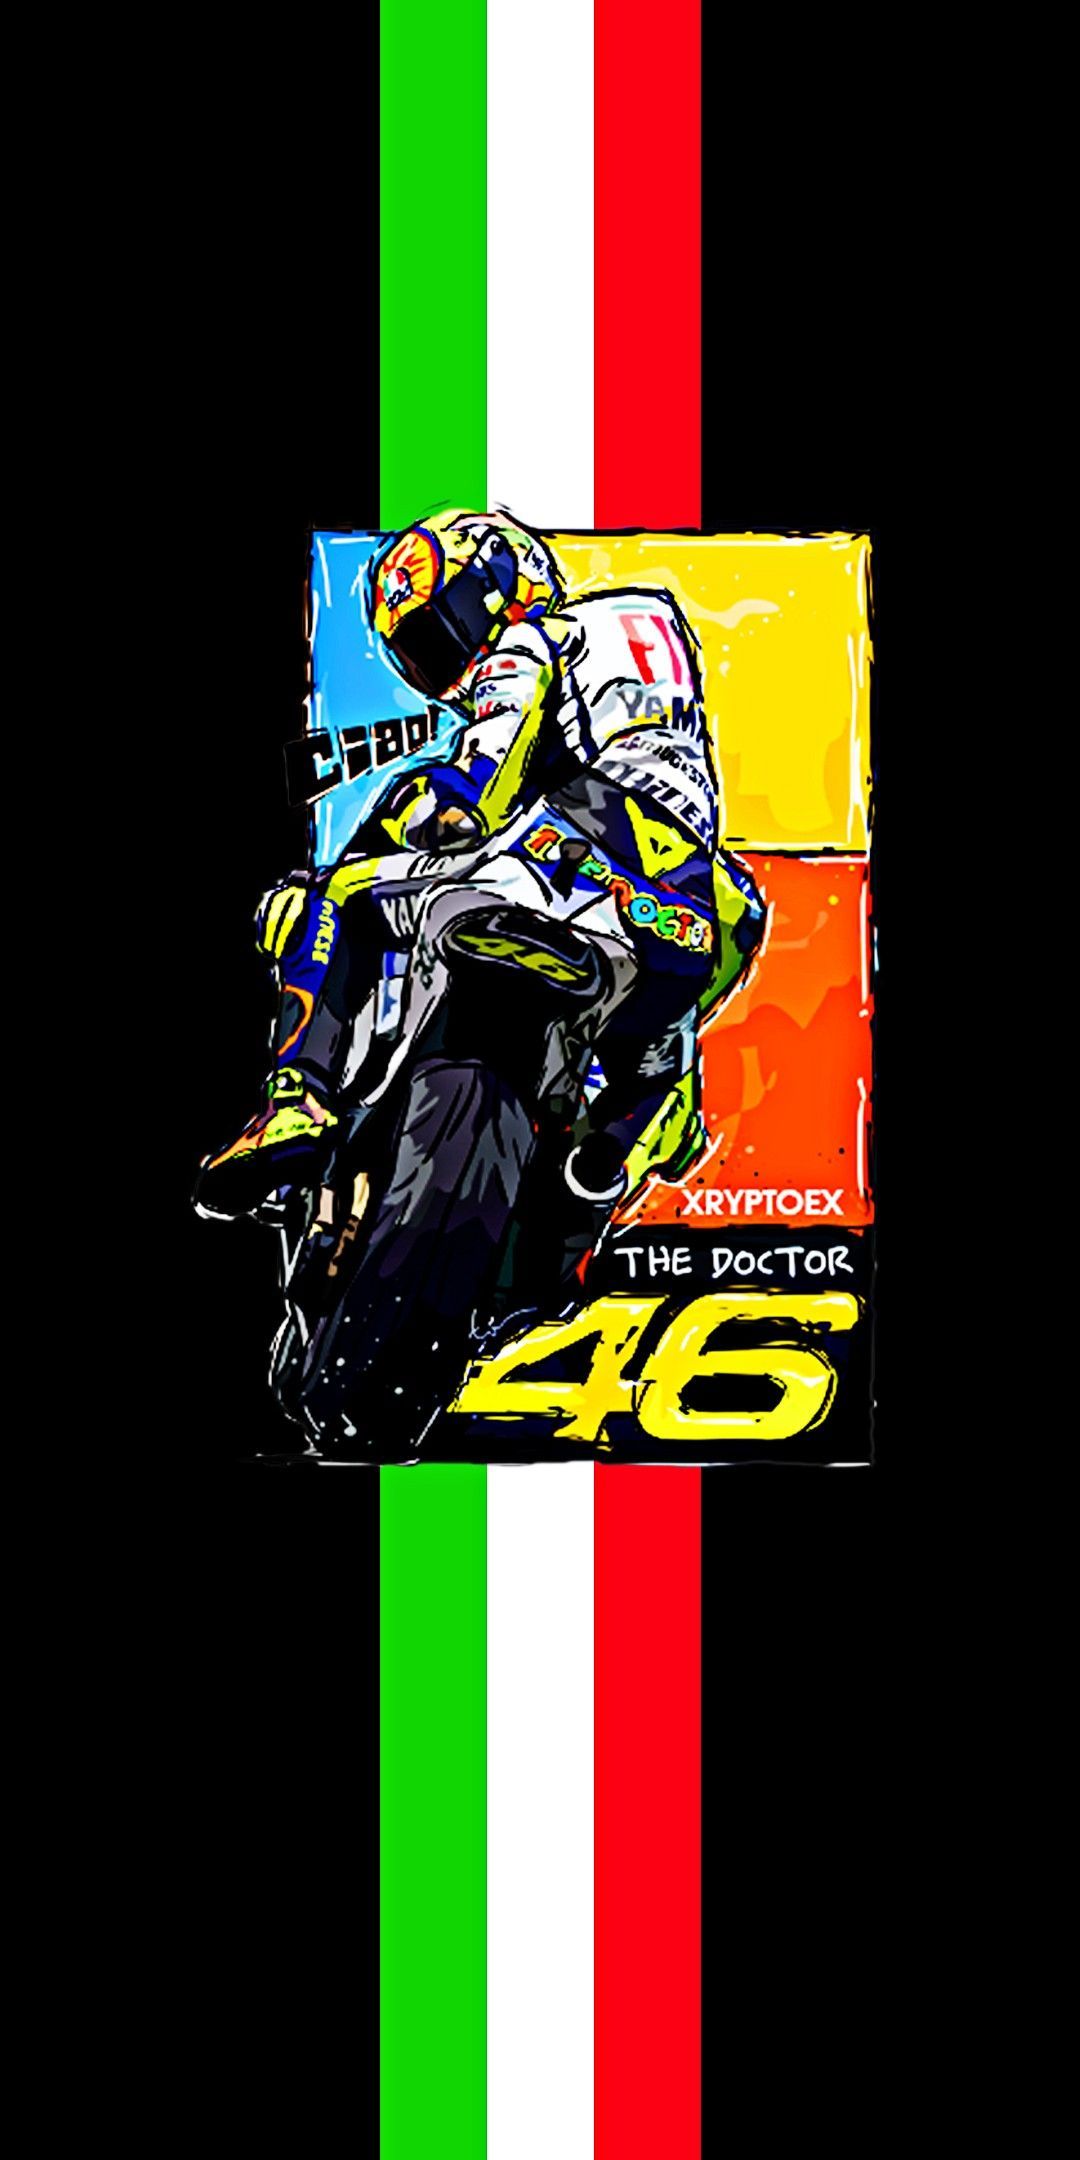  Valentino Rossi Hintergrundbild 1080x2160. Valentino Rossi 46. Vr46 wallpaper hd, 46 rossi wallpaper hd, Valentino rossi 46